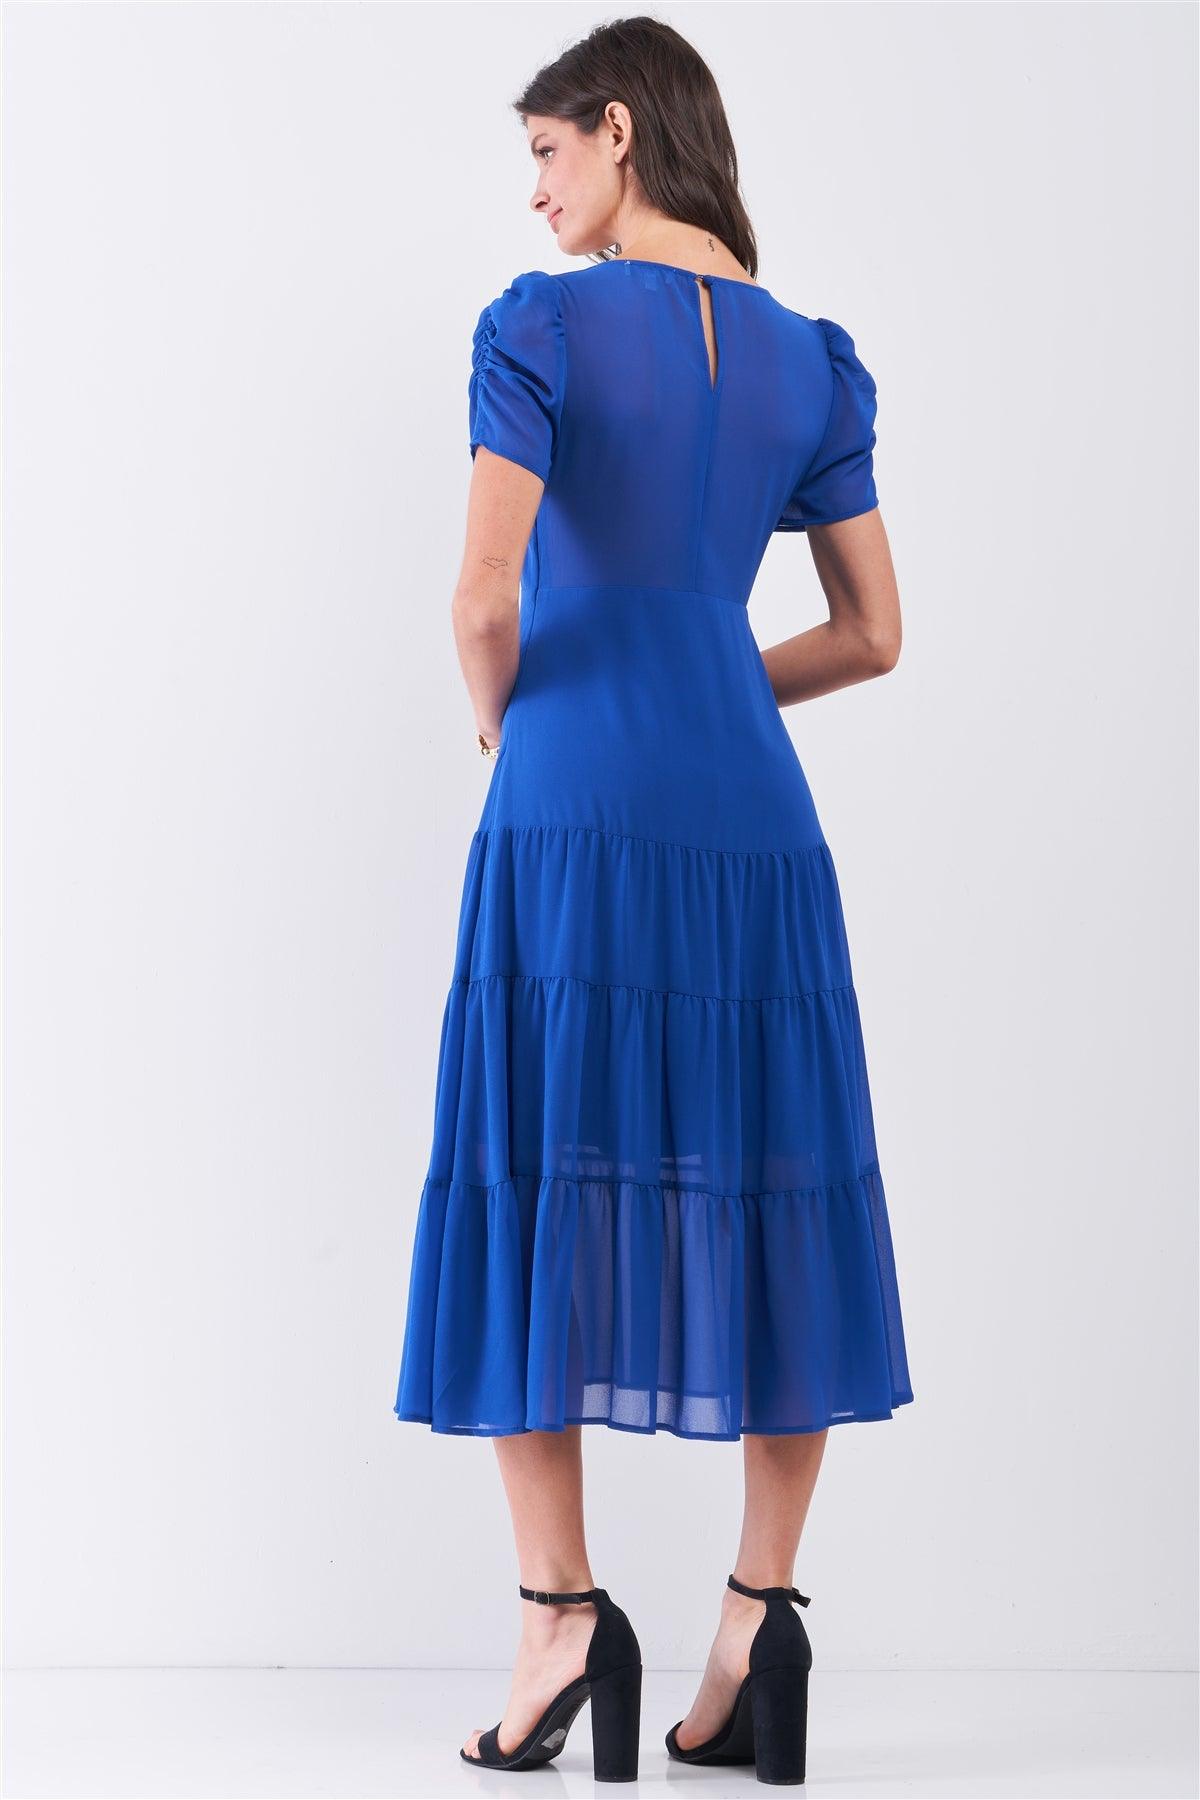 Royal-Blue Short Ruched Sleeve V-Neck Tiered Midi Dress /2-1-3